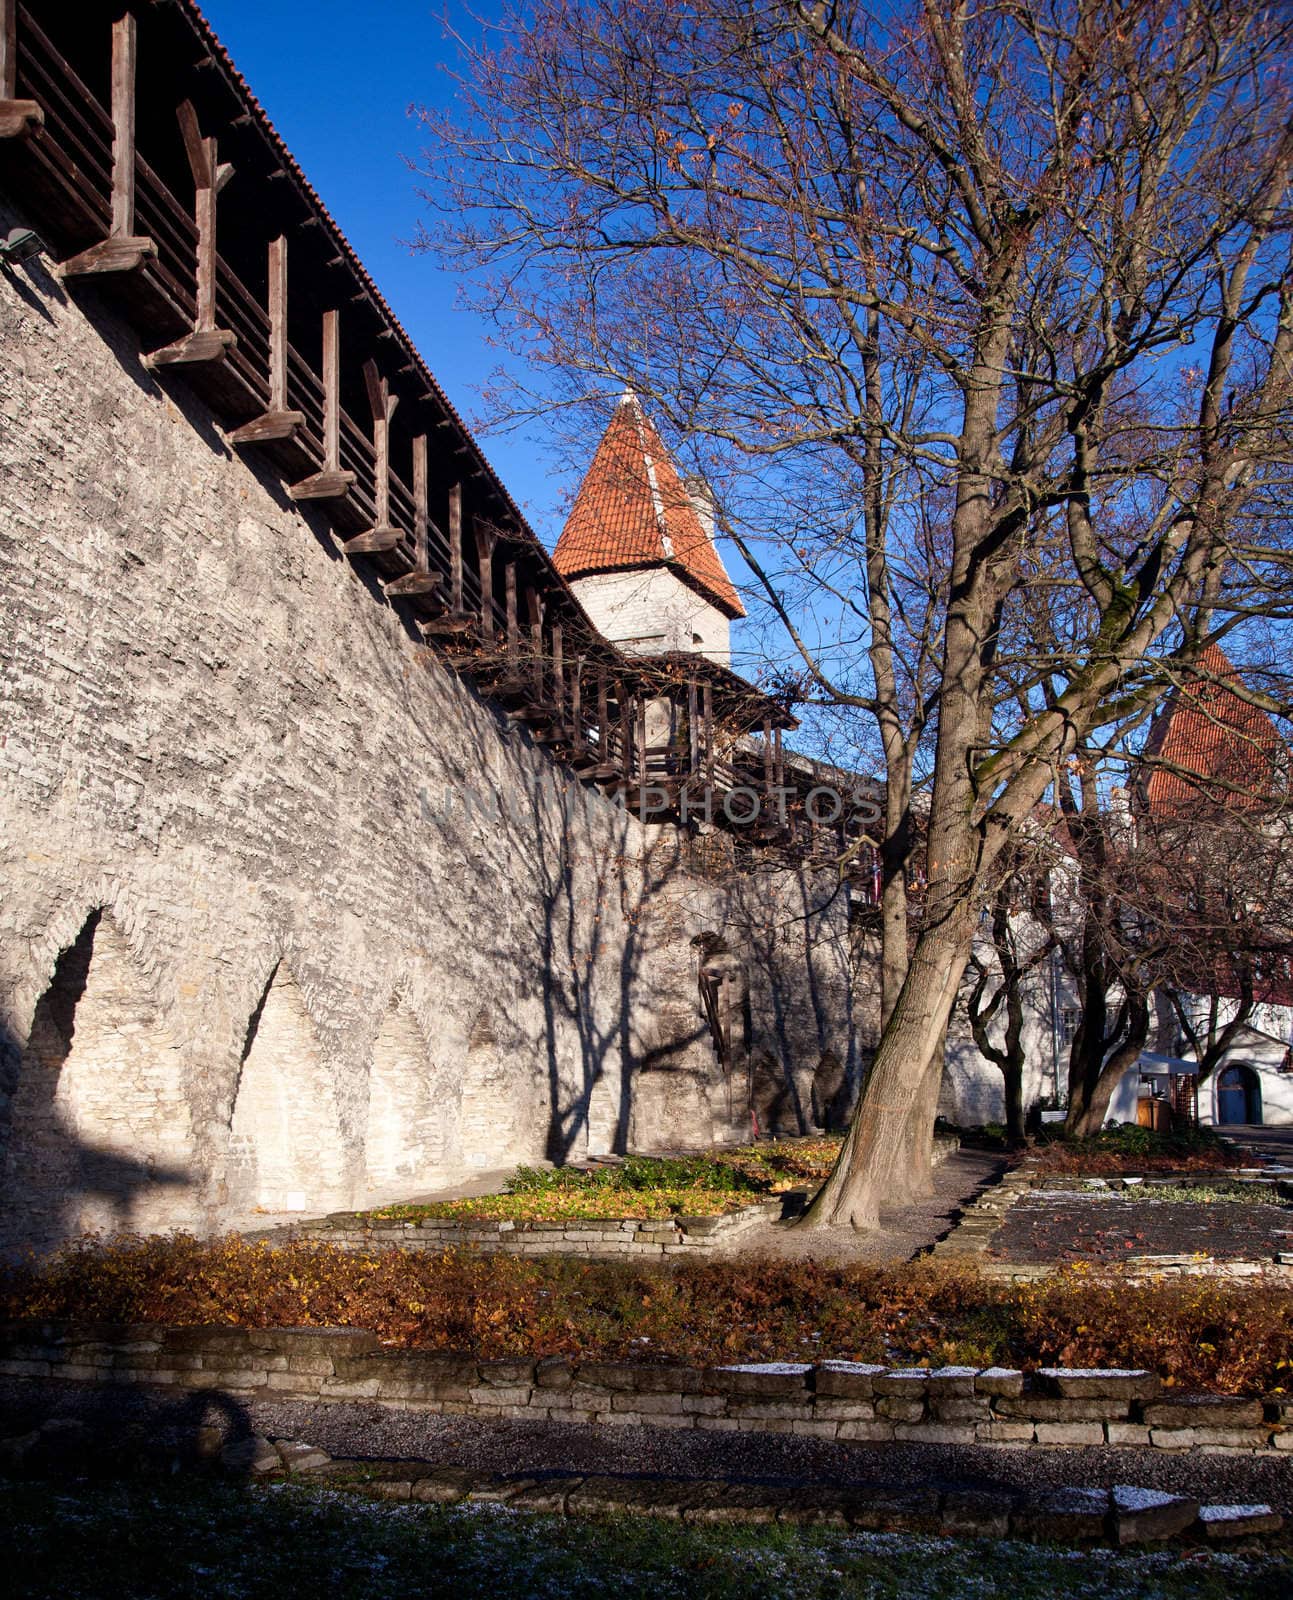 Old town walls in Tallinn by steheap